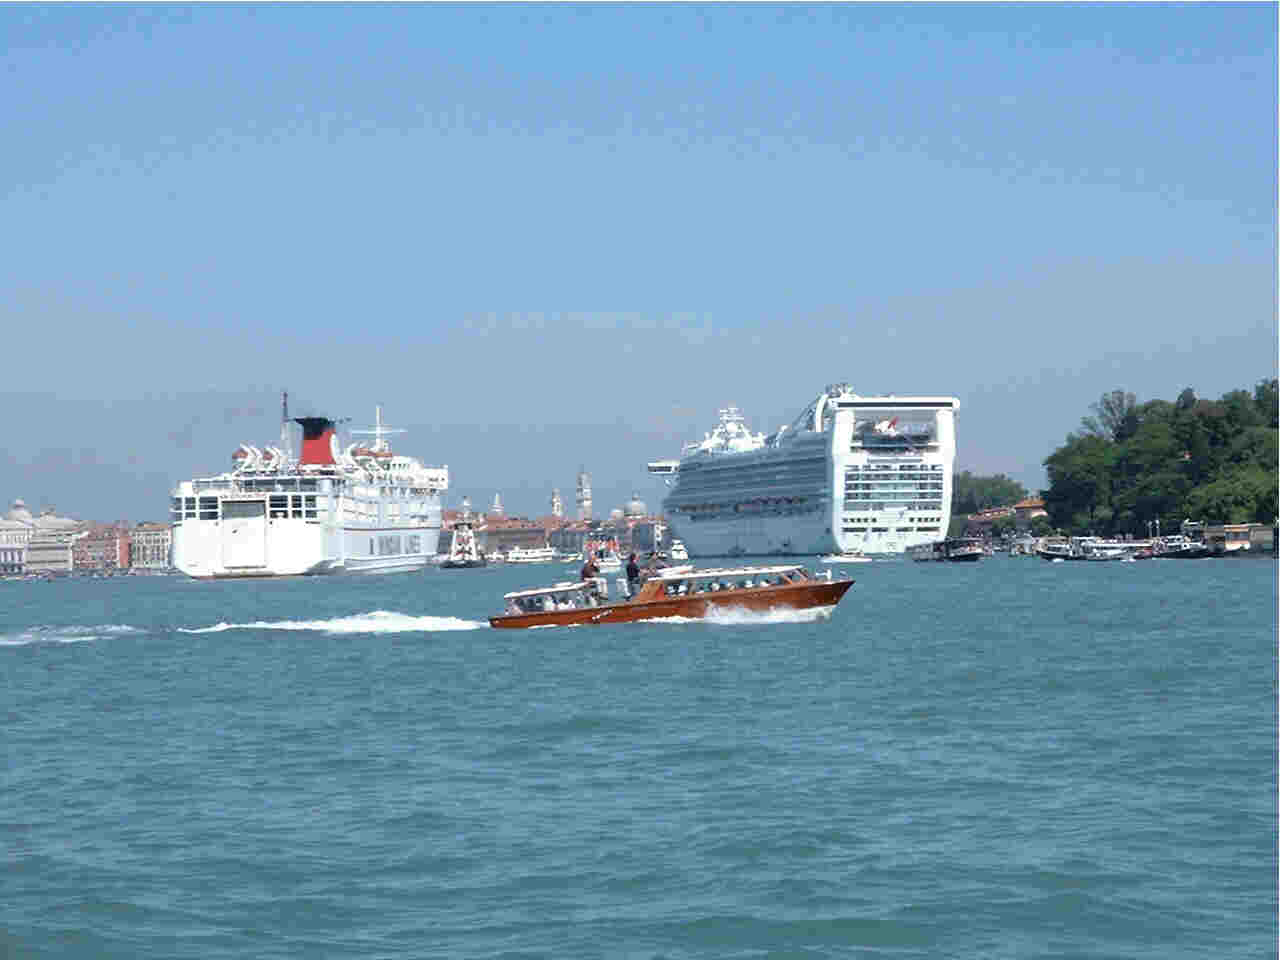 Cruise ship in Venice